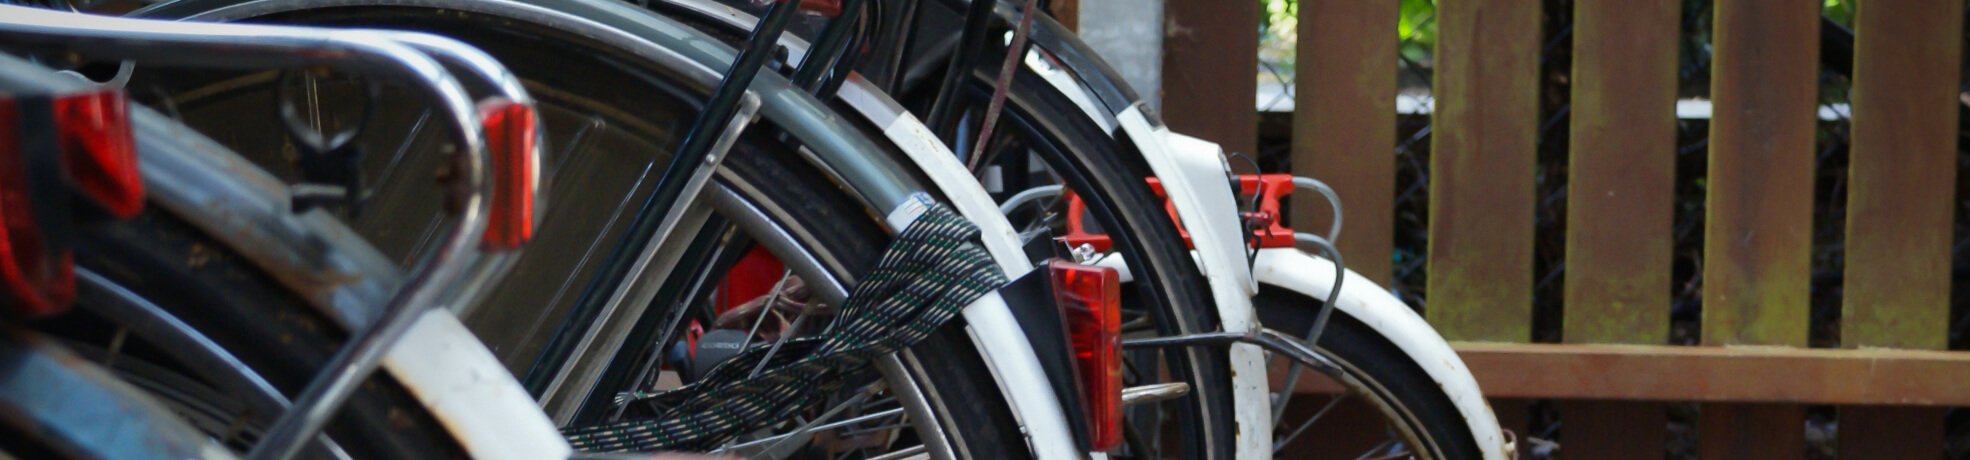 Bike Mudguard Spare Parts